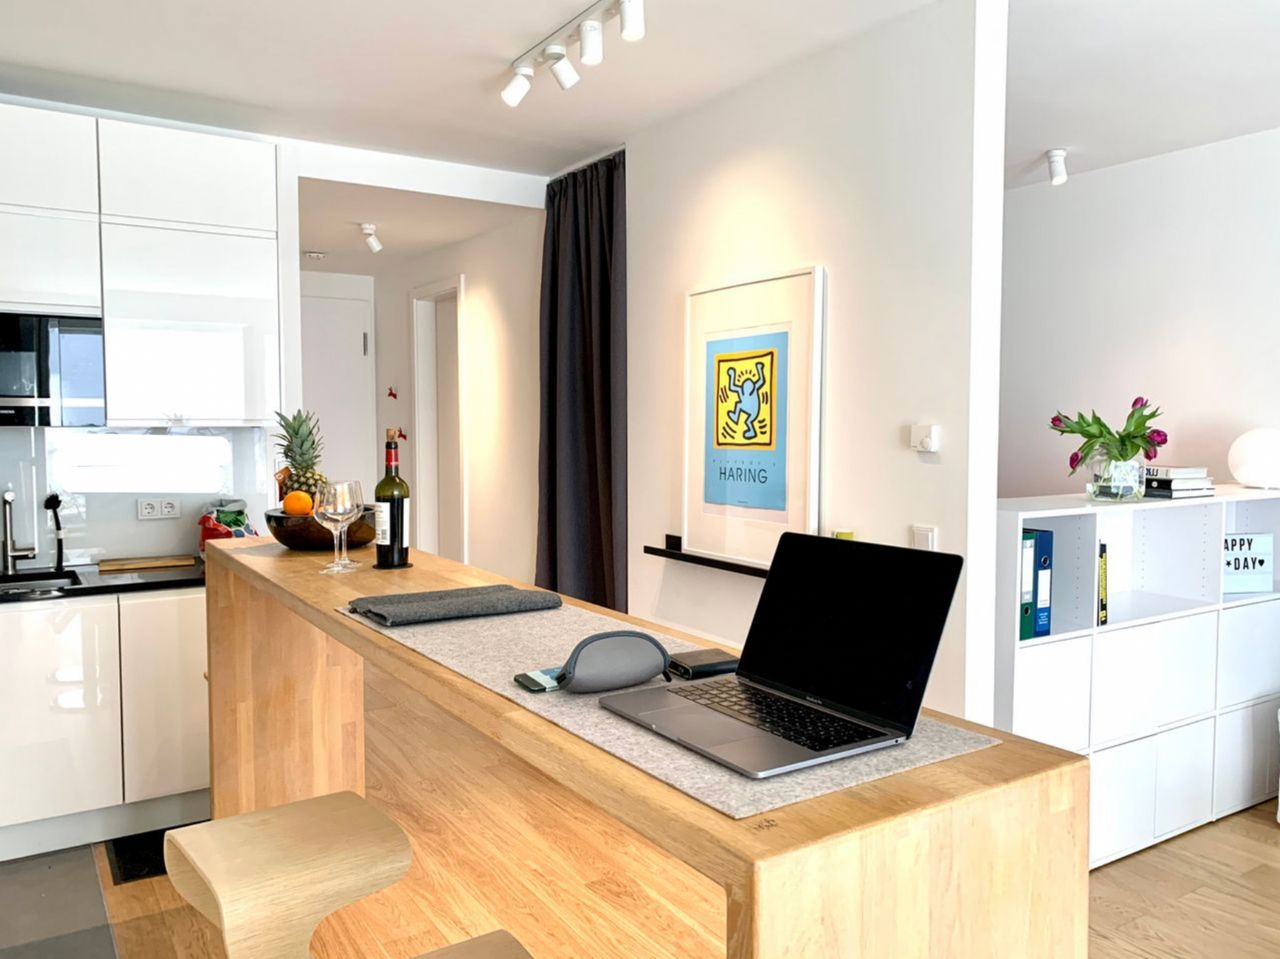 New built, modern 55qm studio-apartment located in hip Friedrichshain